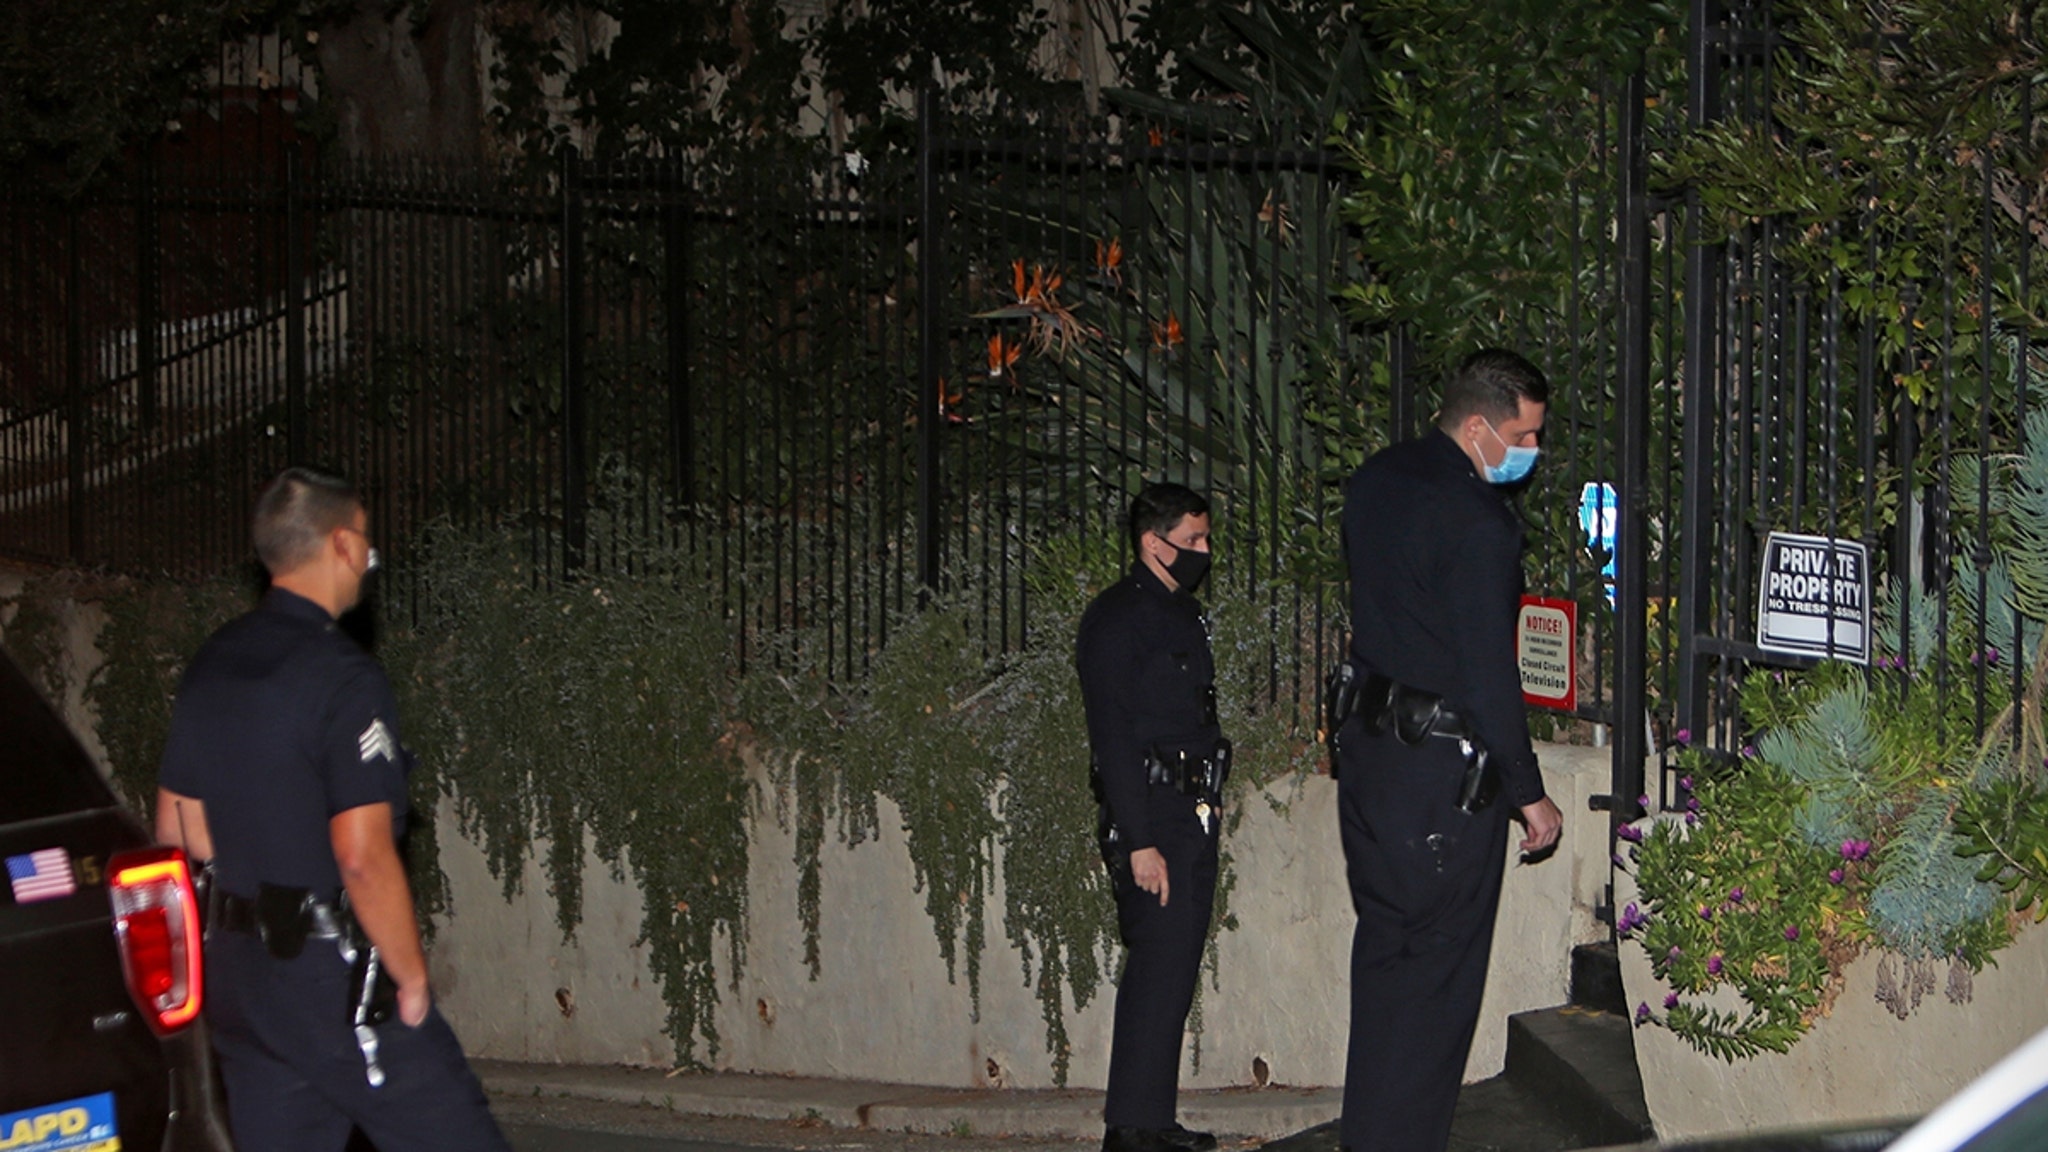 Policemen swarm Marilyn Manson’s LA home for welfare search